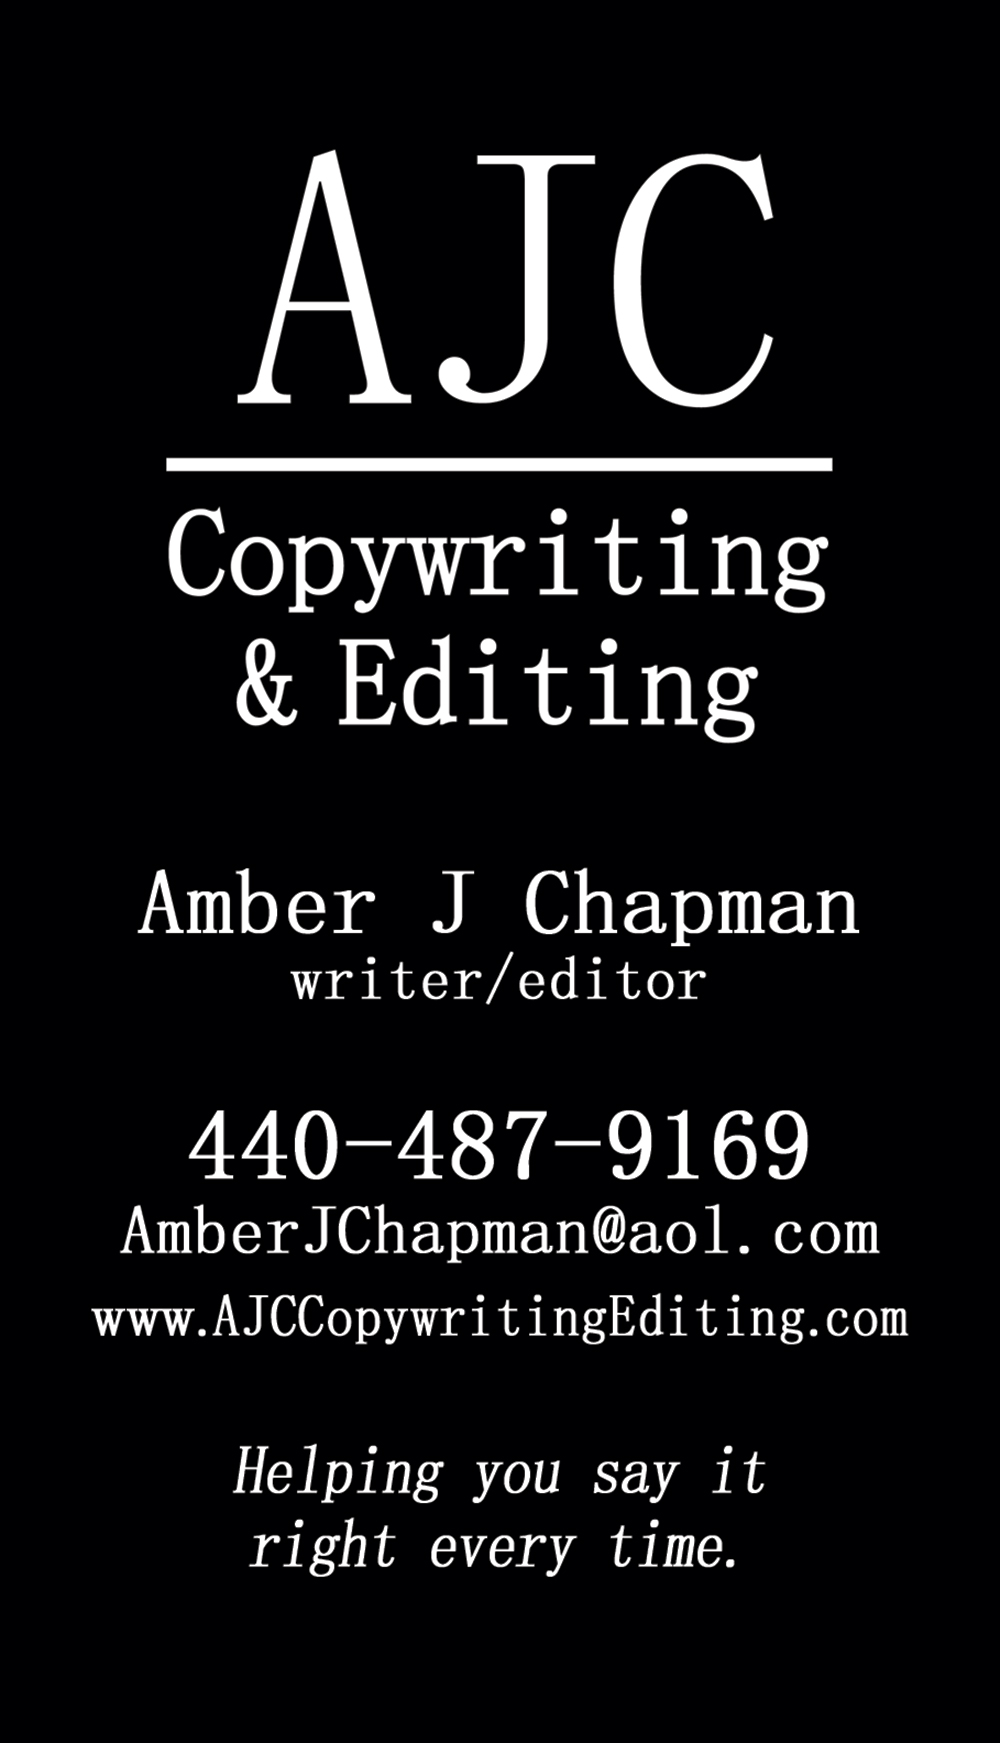 ajc-copywriting-business-card-front-filnal-flat.jpg